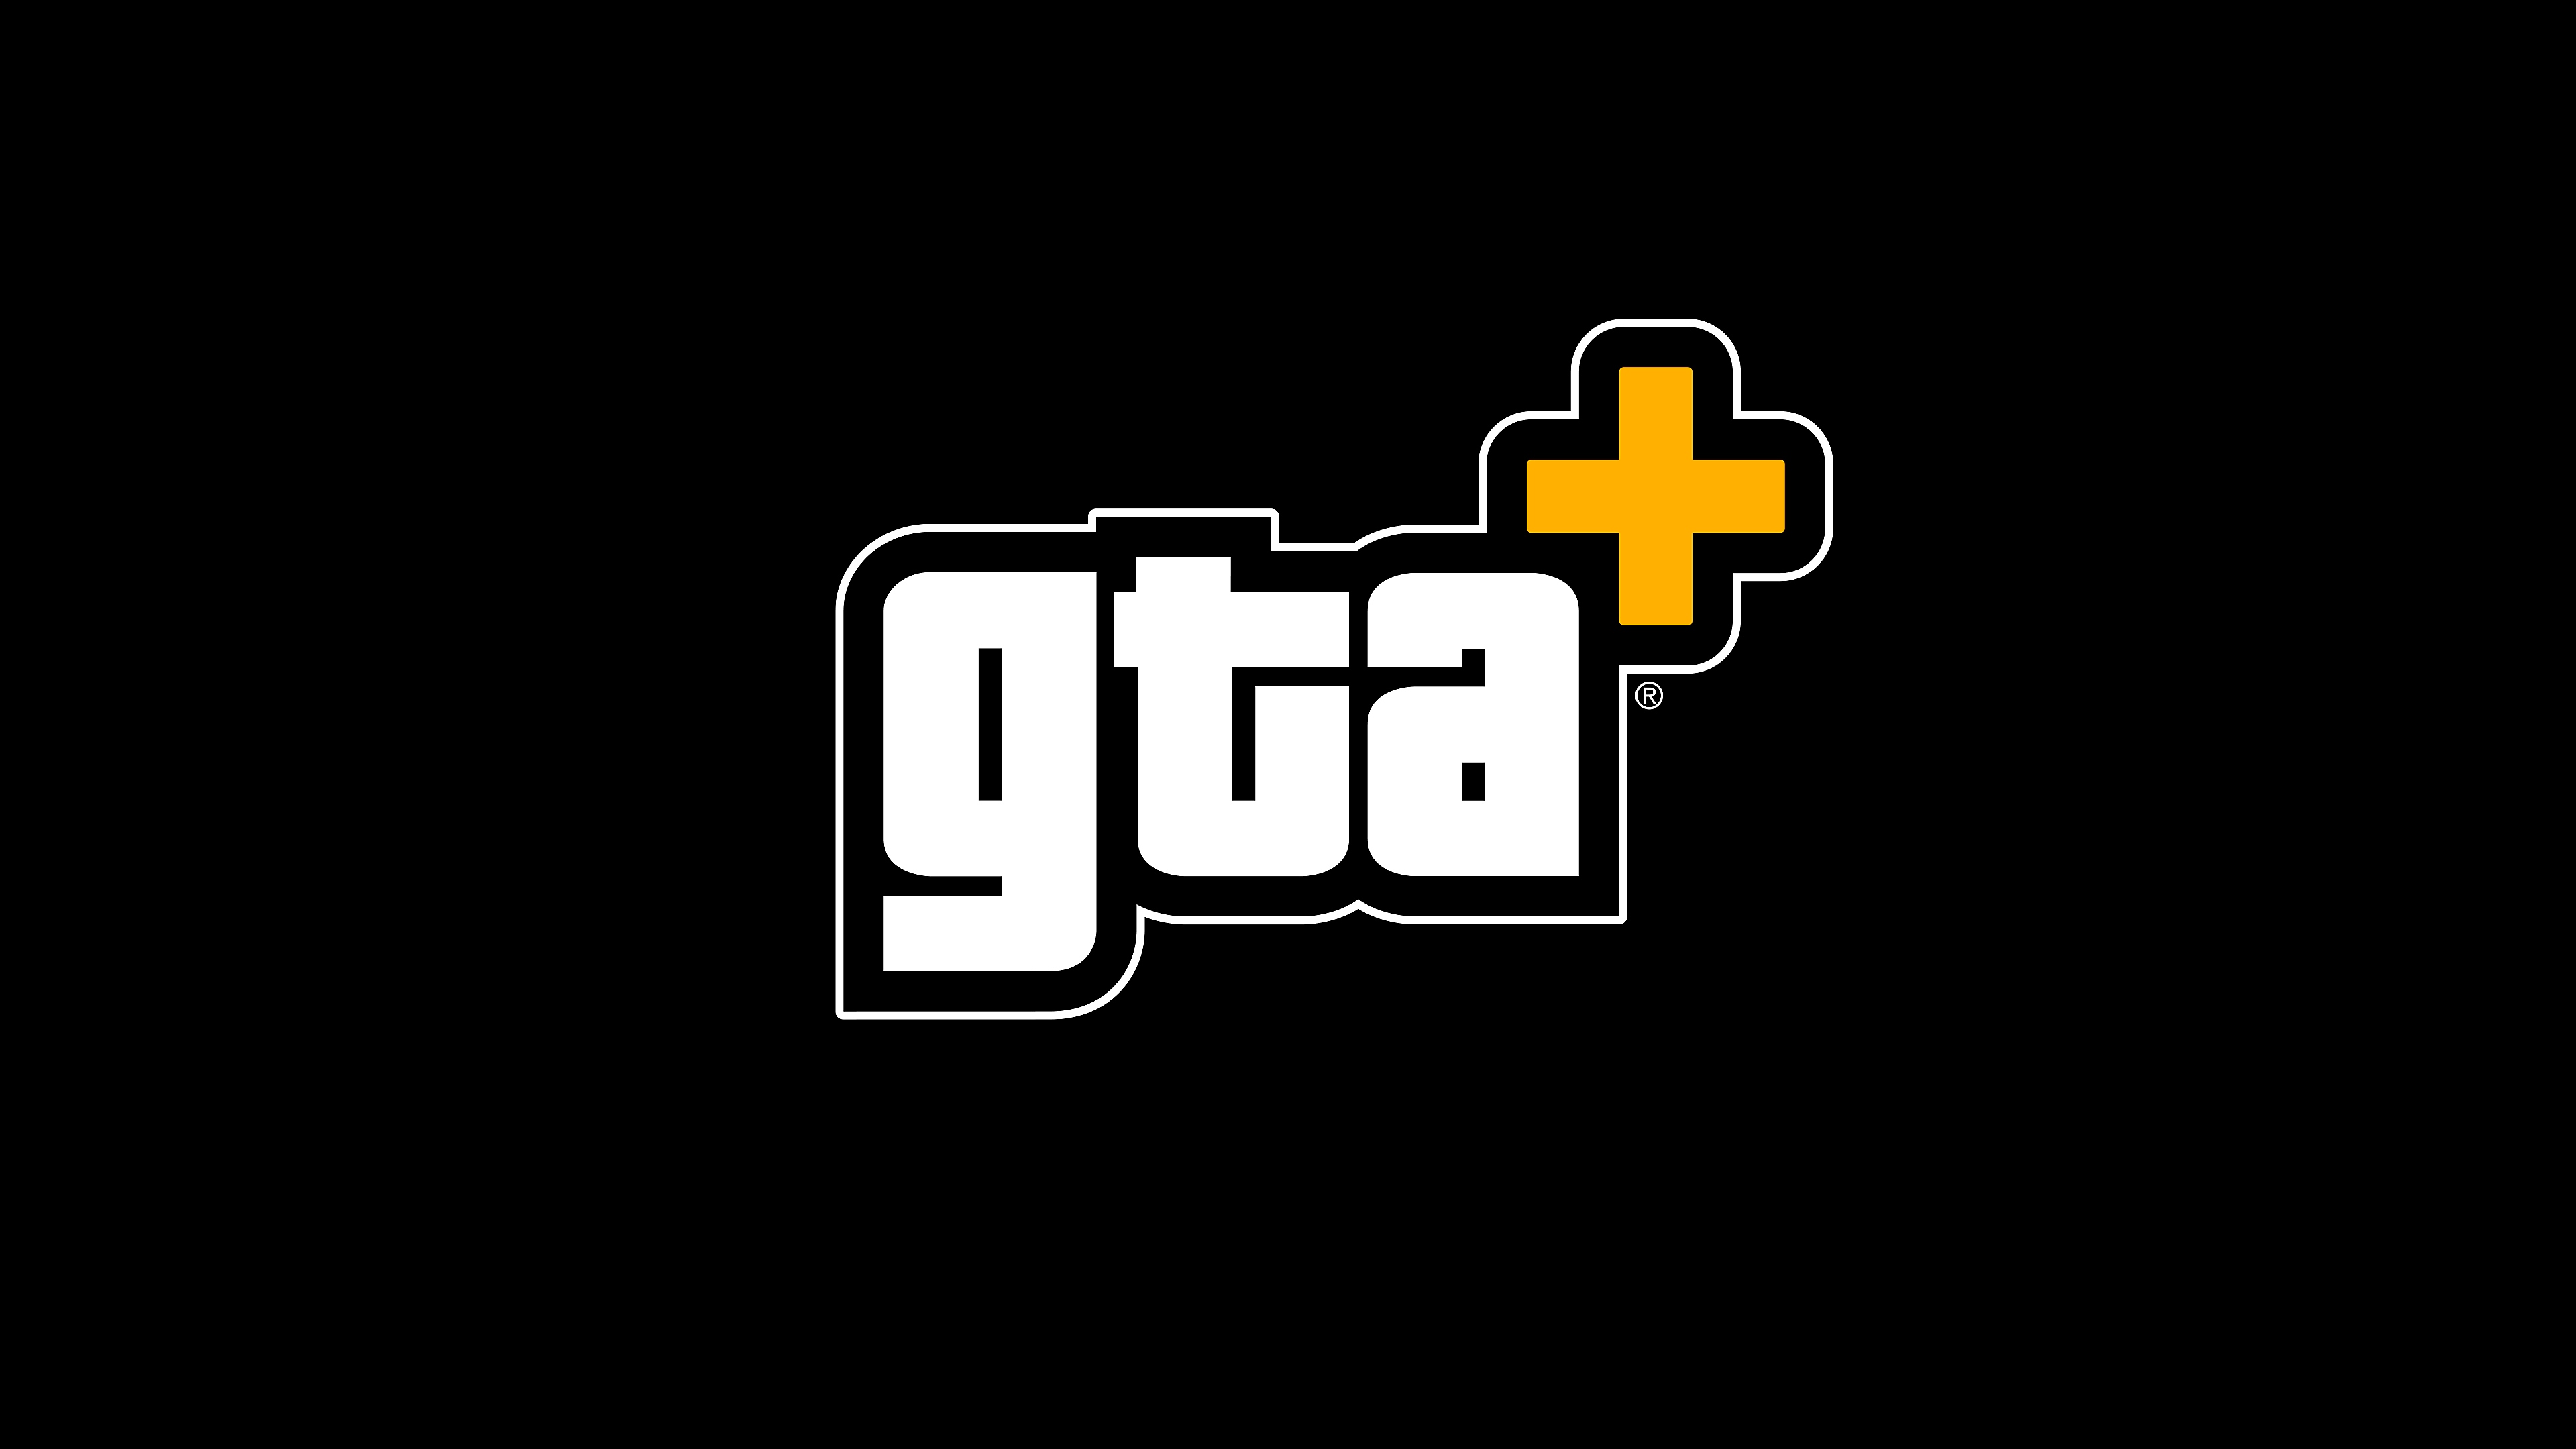 GTA+ Subscription key artwork showing the logo